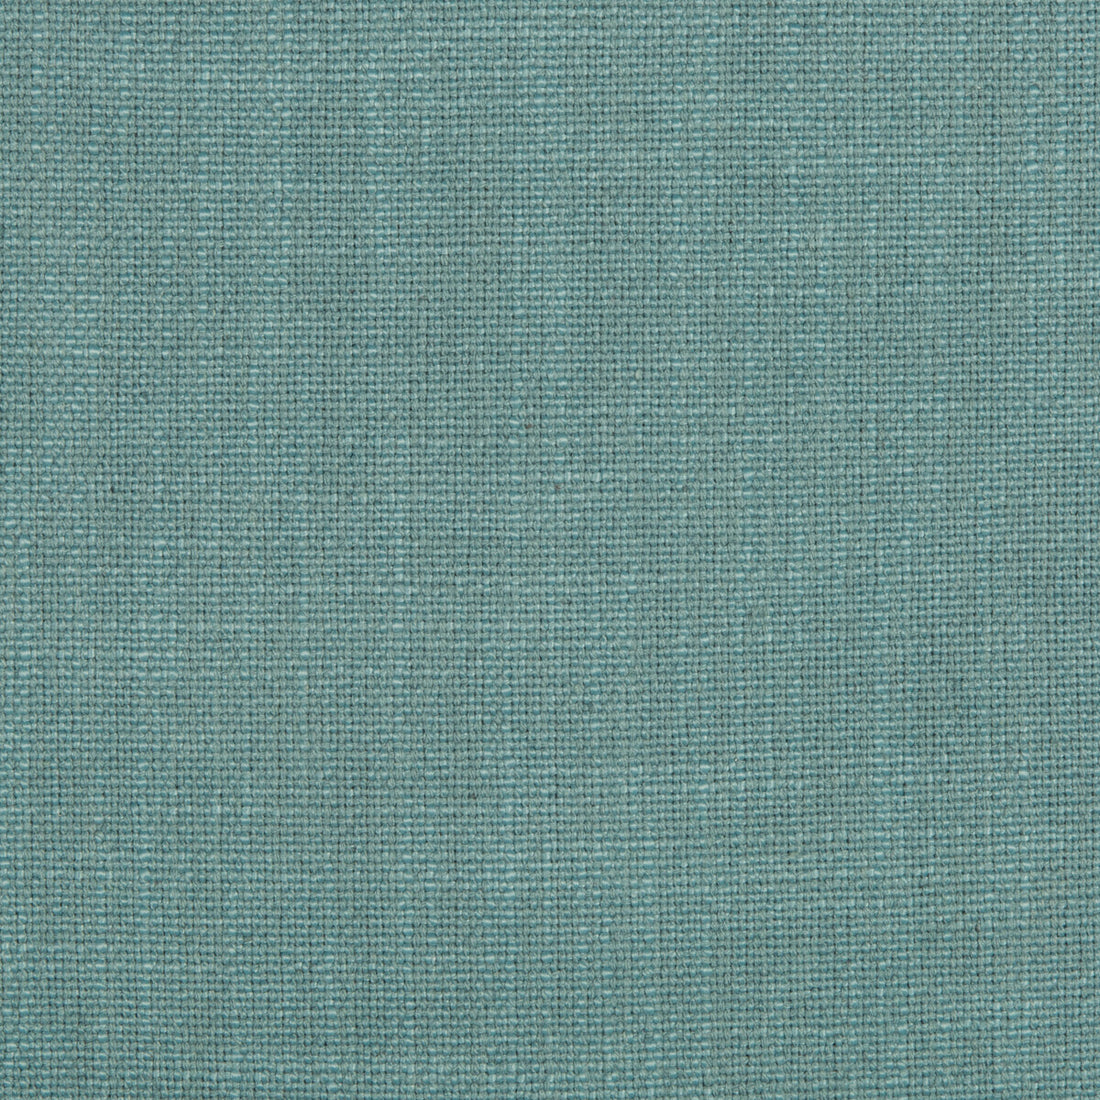 Kravet Smart fabric in 35226-3501 color - pattern 35226.3501.0 - by Kravet Smart in the Performance Kravetarmor collection